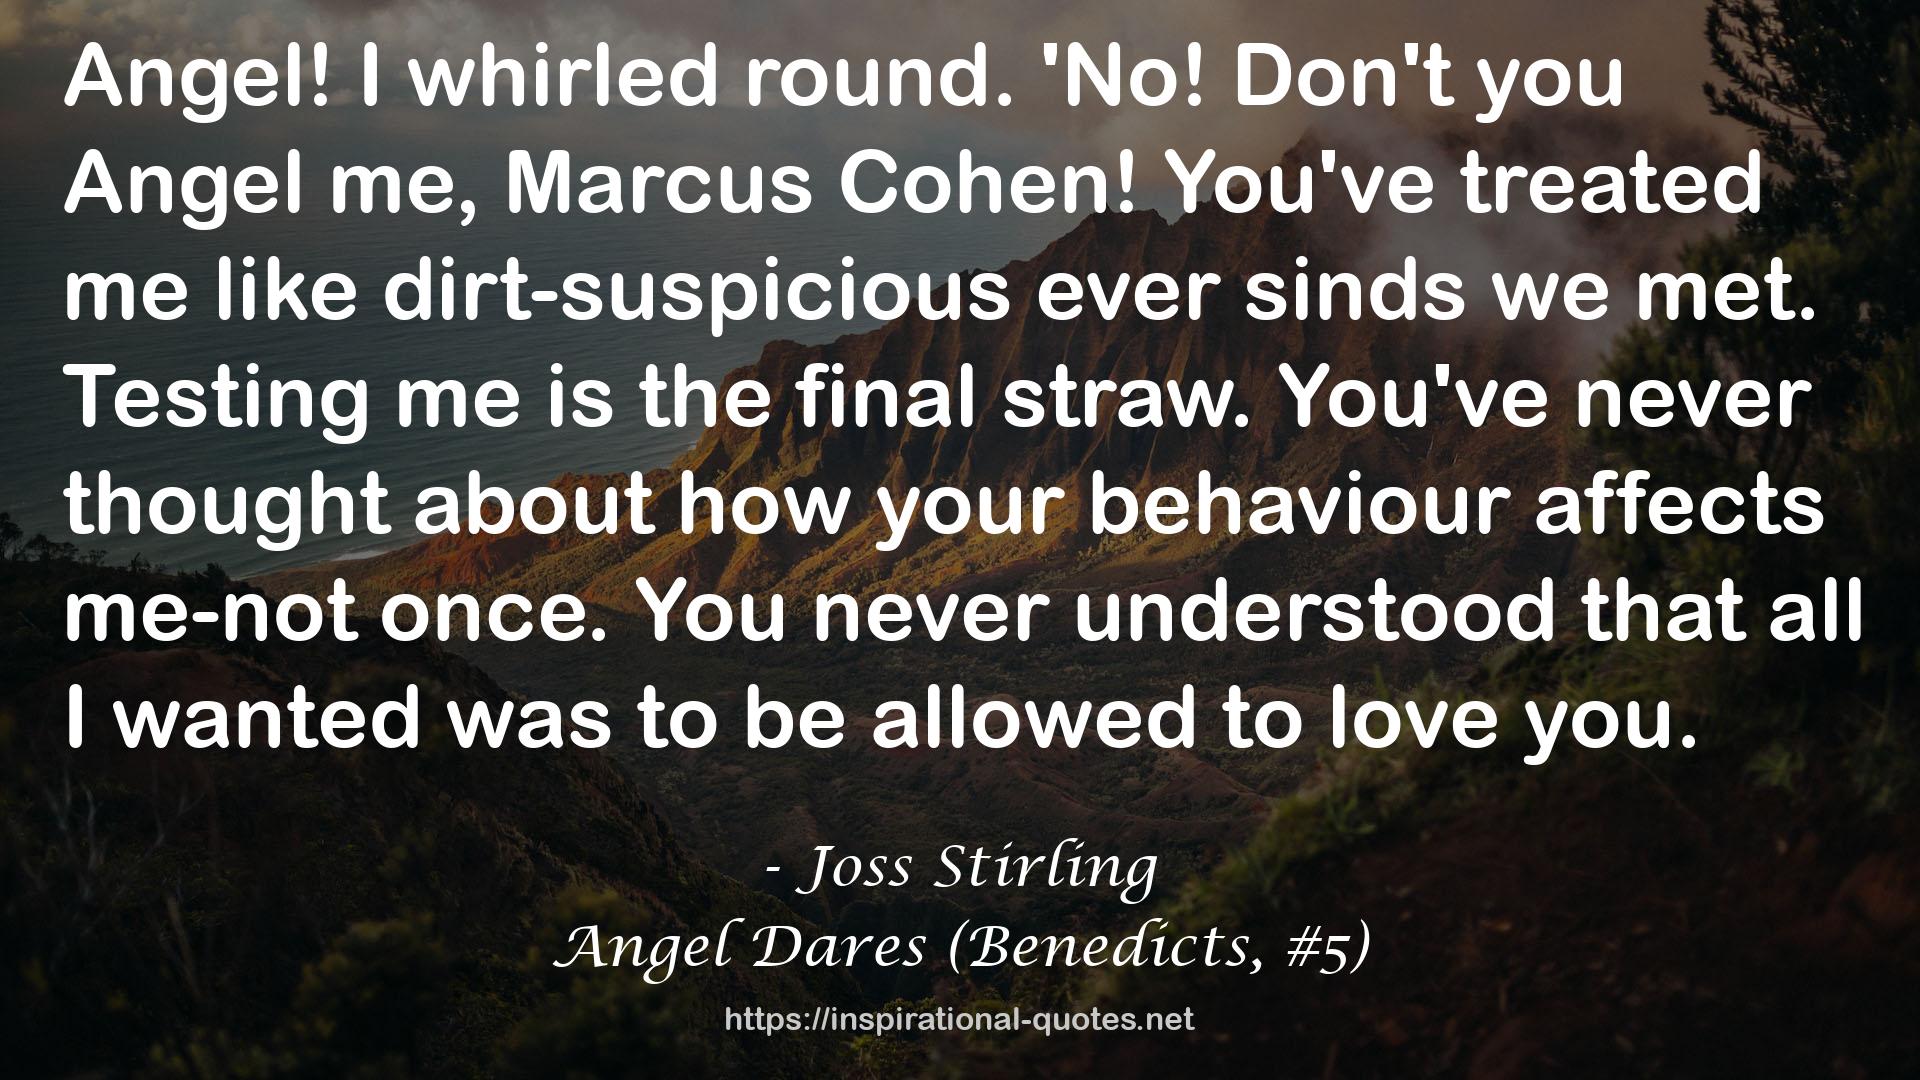 Angel Dares (Benedicts, #5) QUOTES